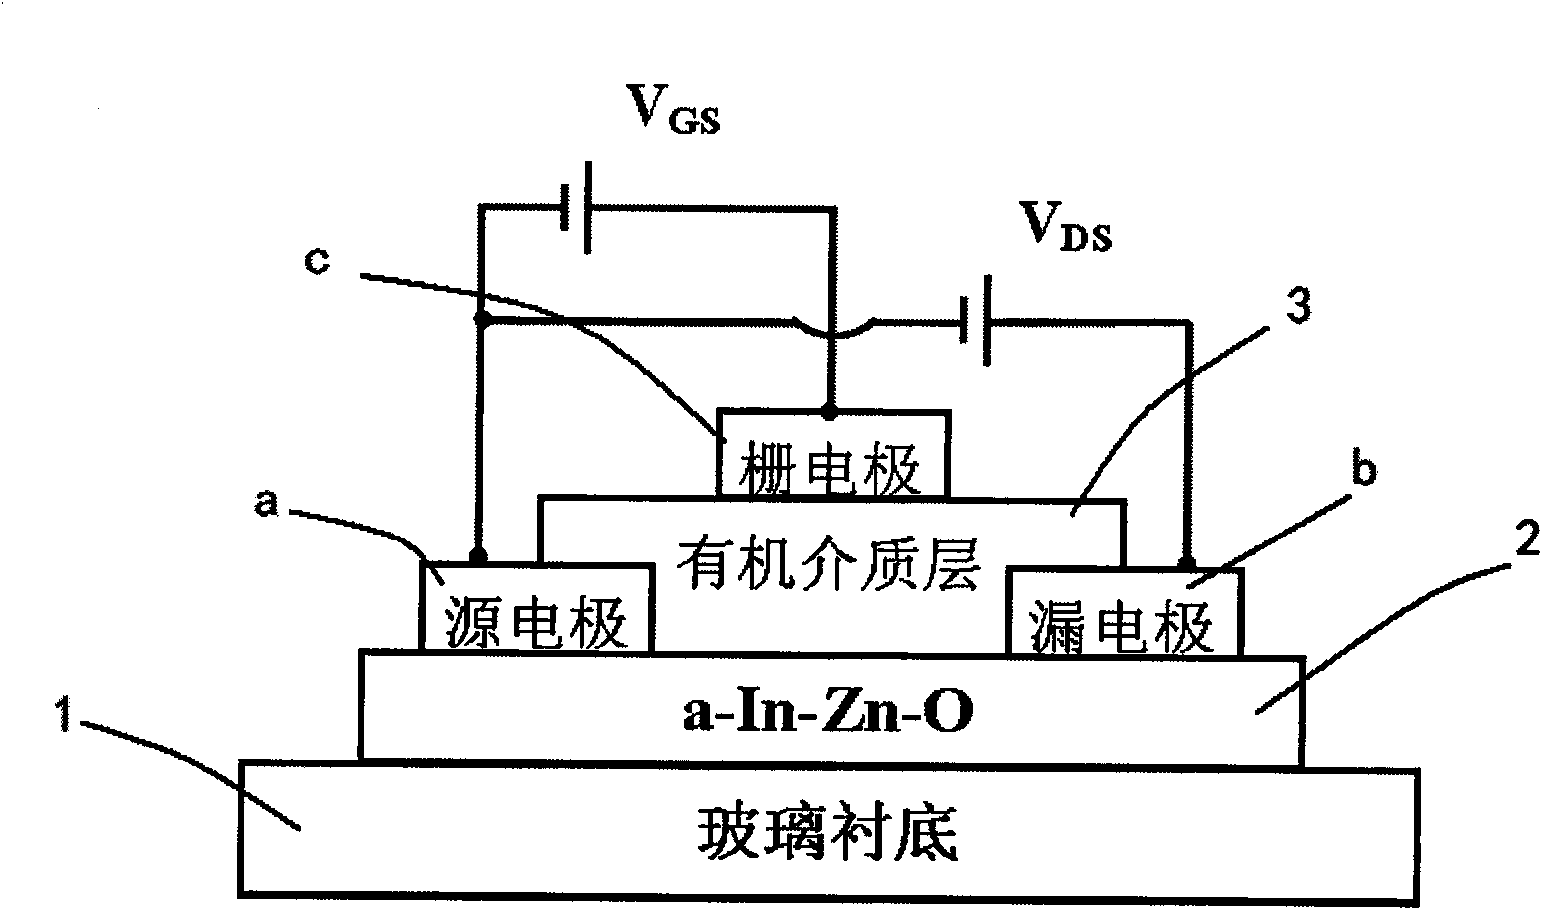 Method for preparing thin film transistor